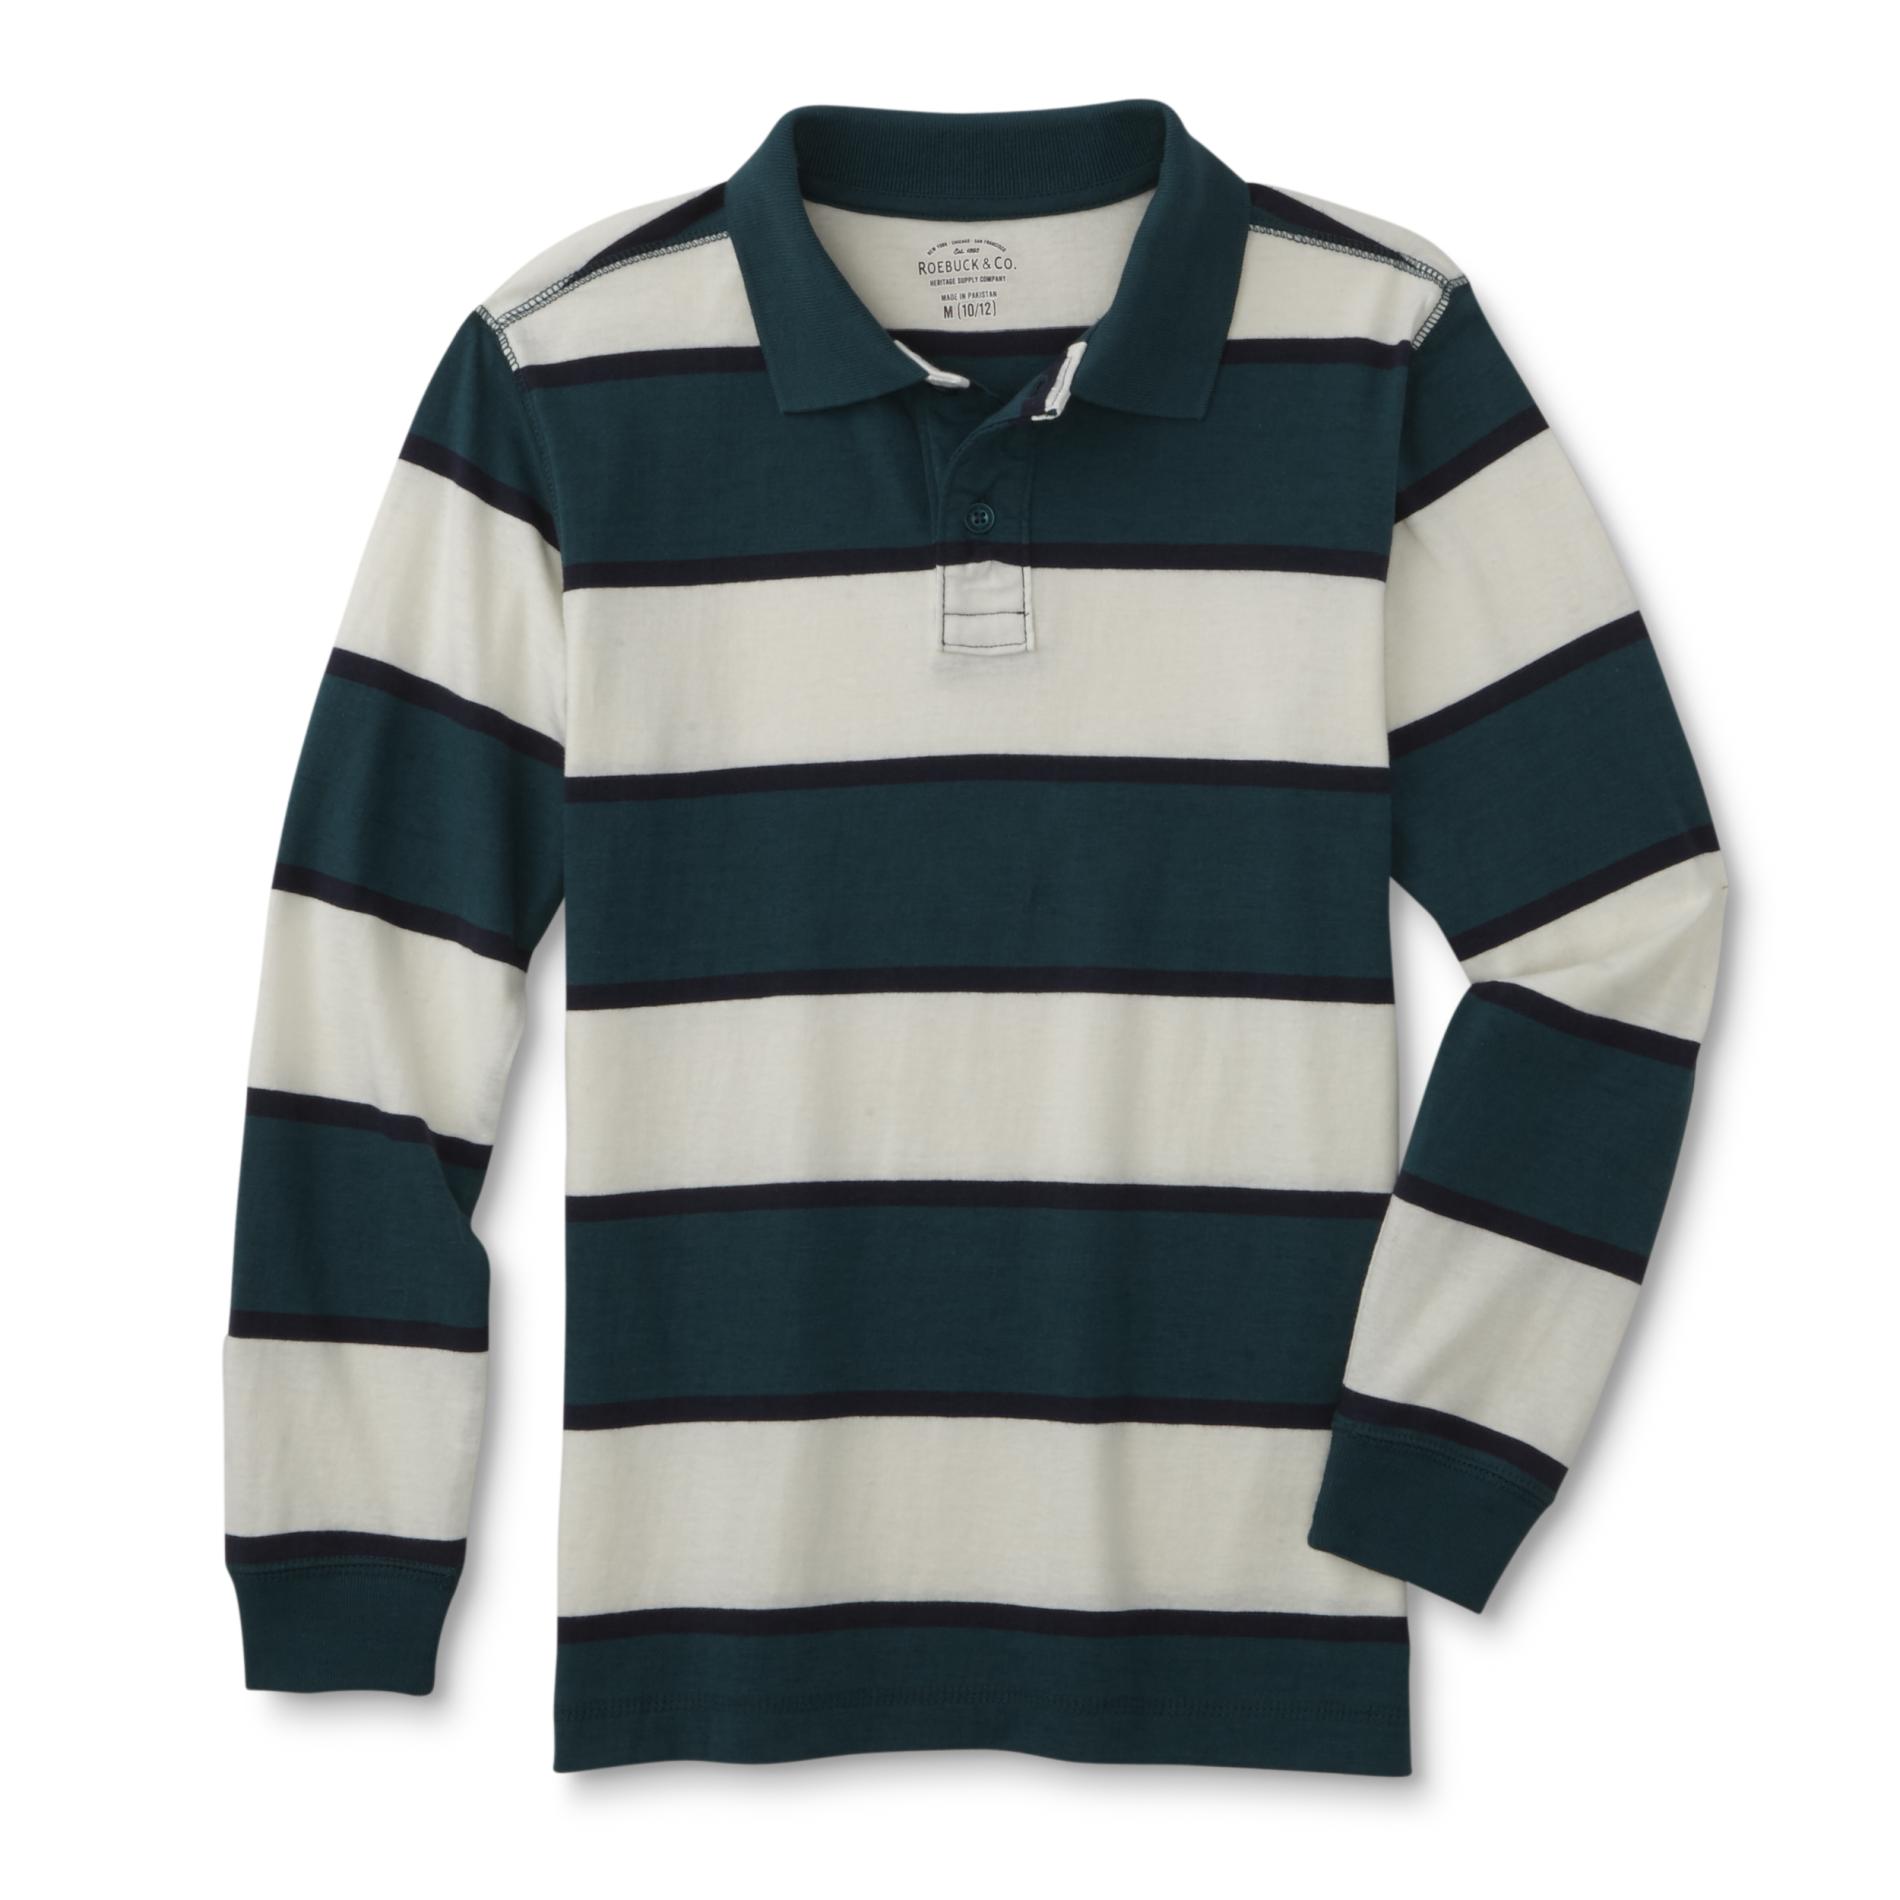 Roebuck & Co. Boys' Long-Sleeve Polo Shirt - Striped